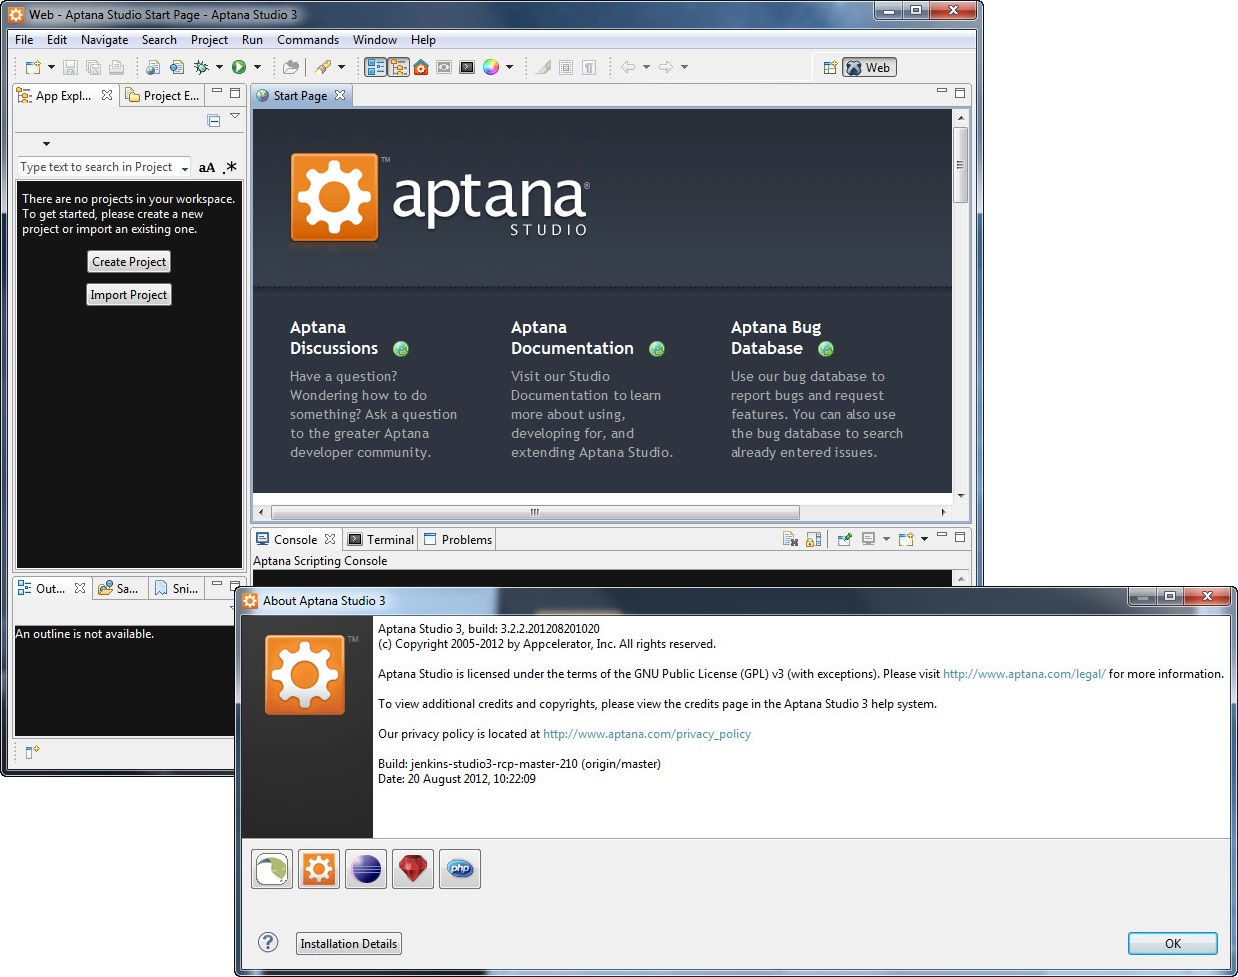 aptana studio 3.6.1 windows 64